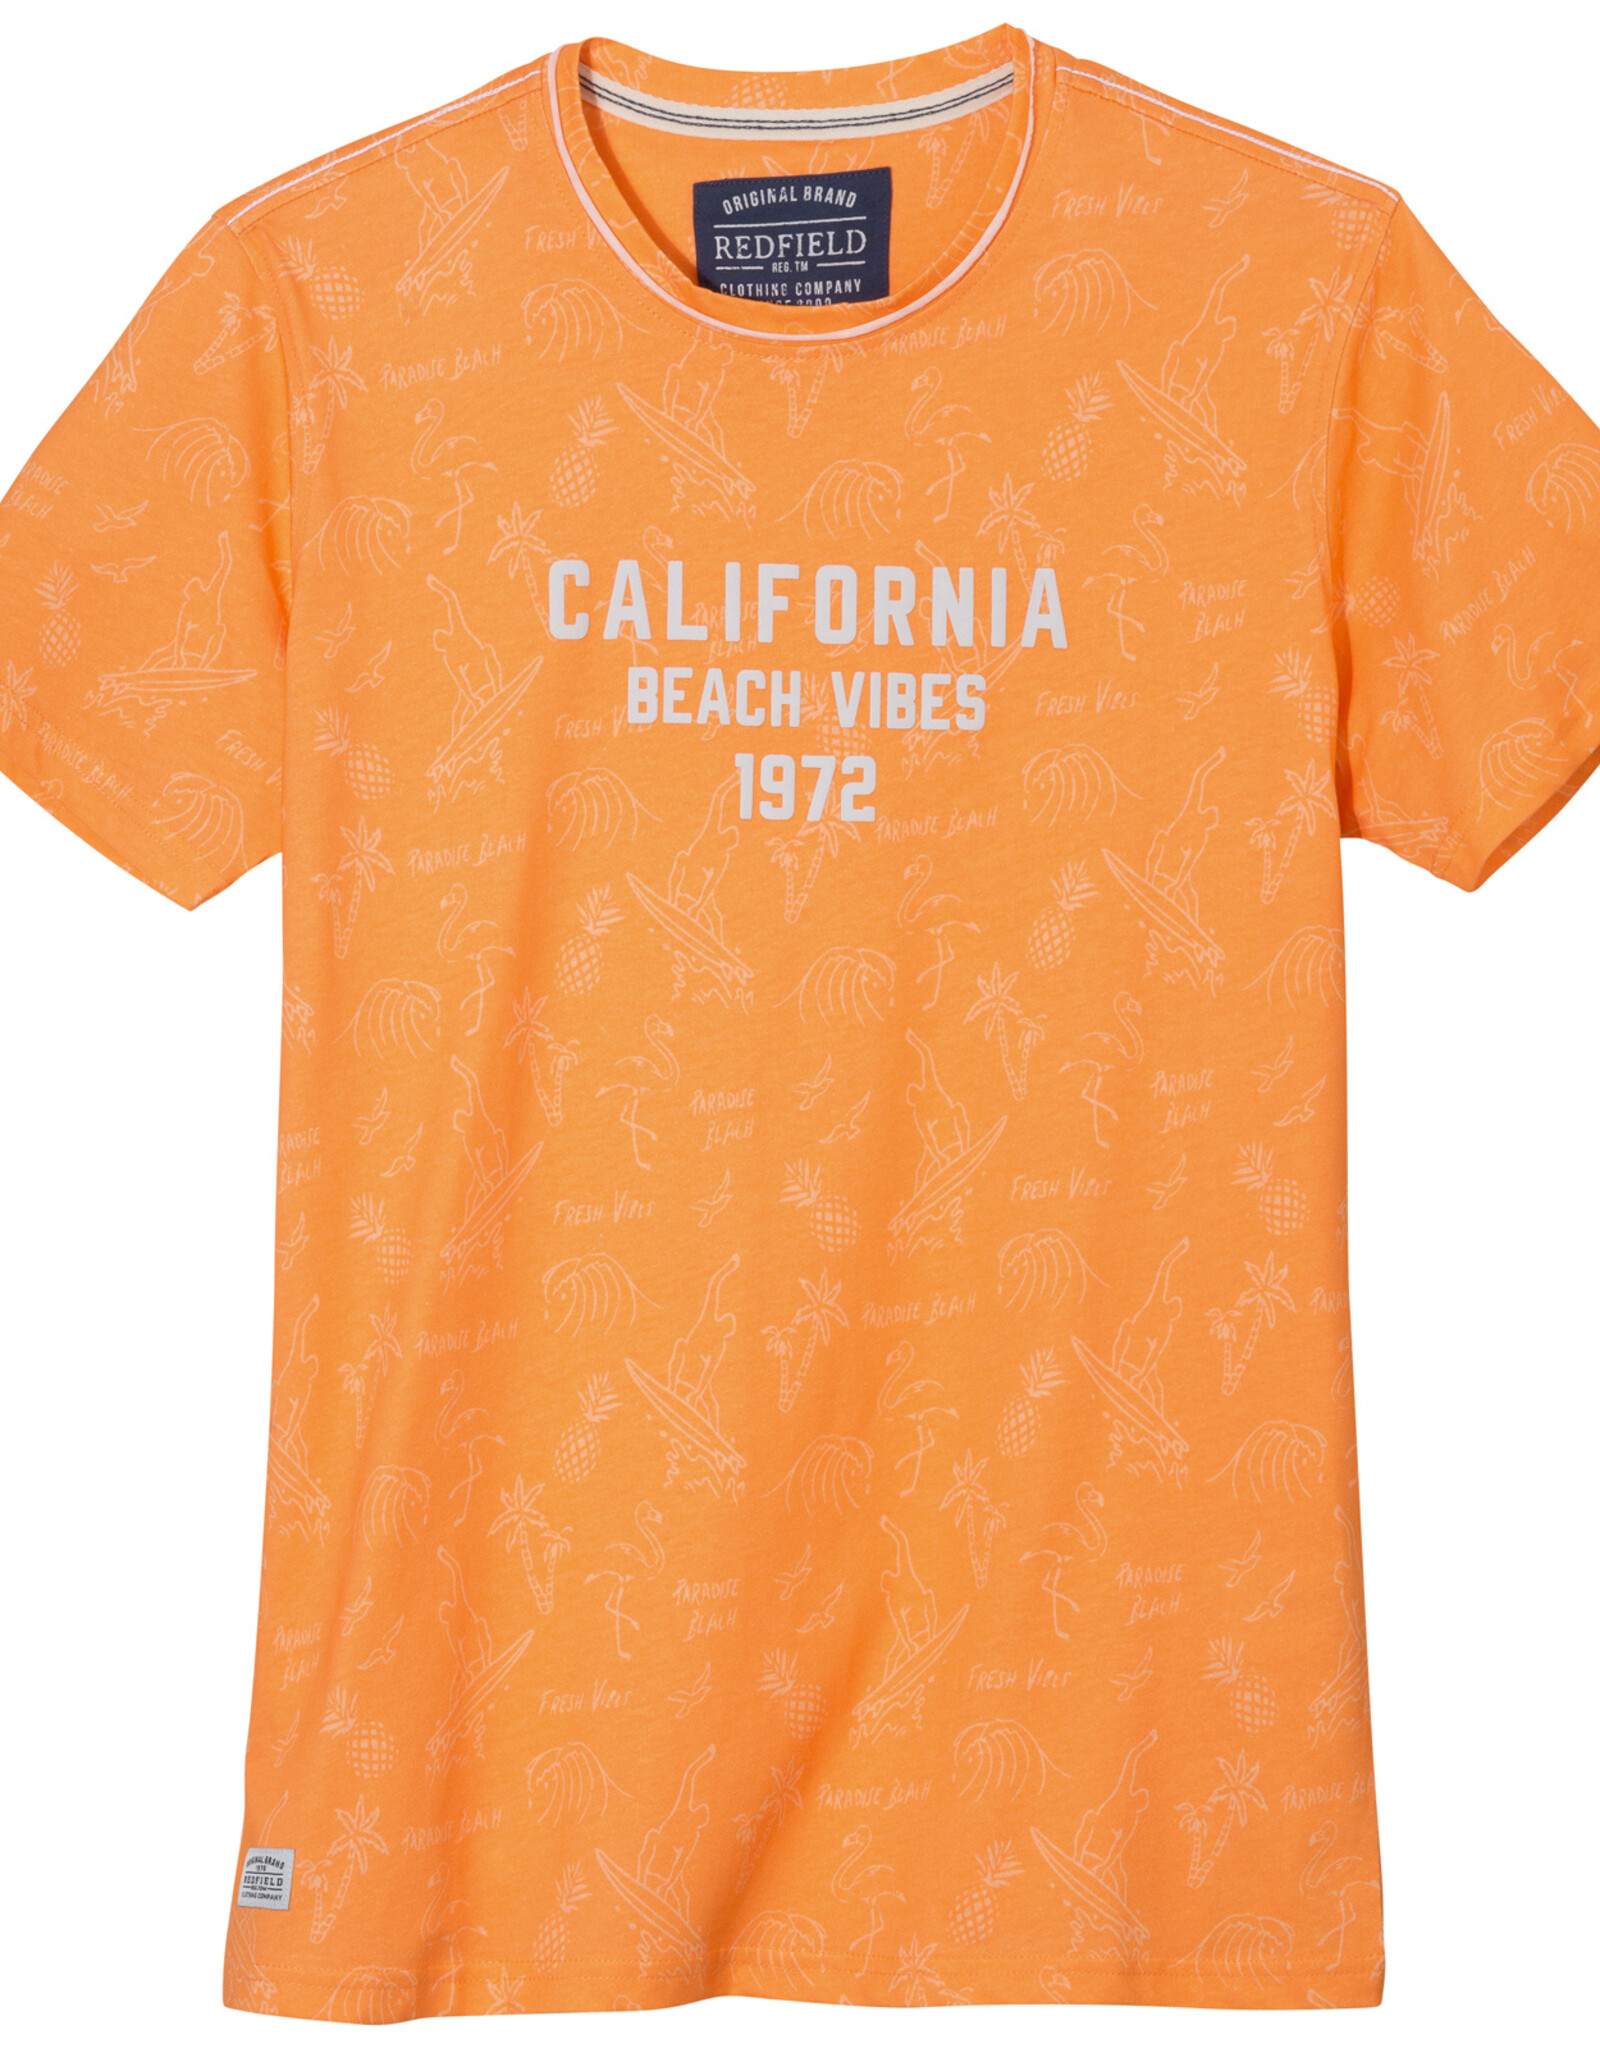 Redfield T-SHIRT California melba orange